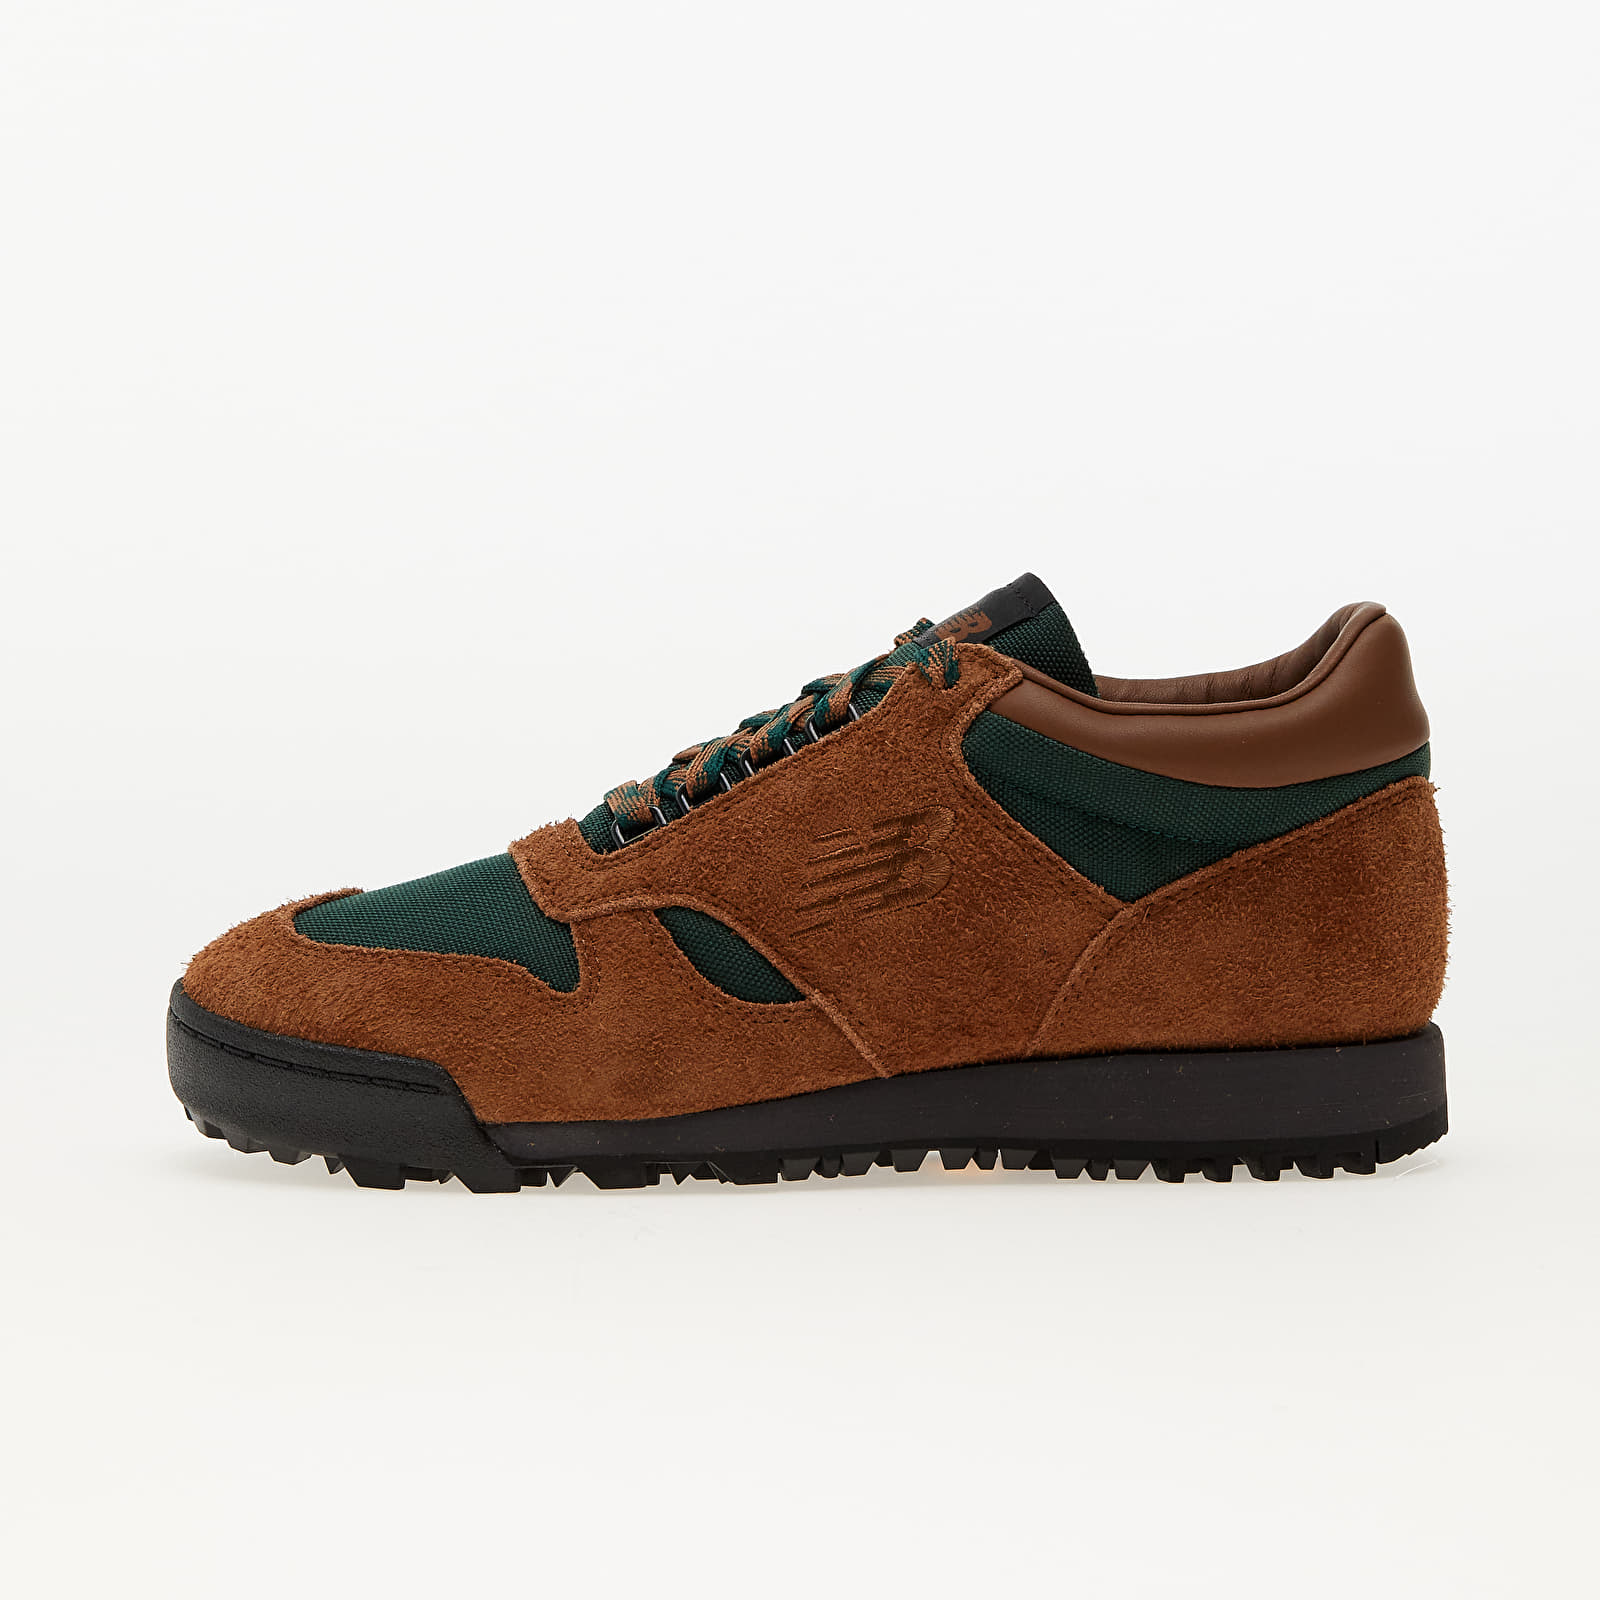 Adidași și pantofi pentru bărbați New Balance Rainier True brown/ Nightwatch Green/ Magnet